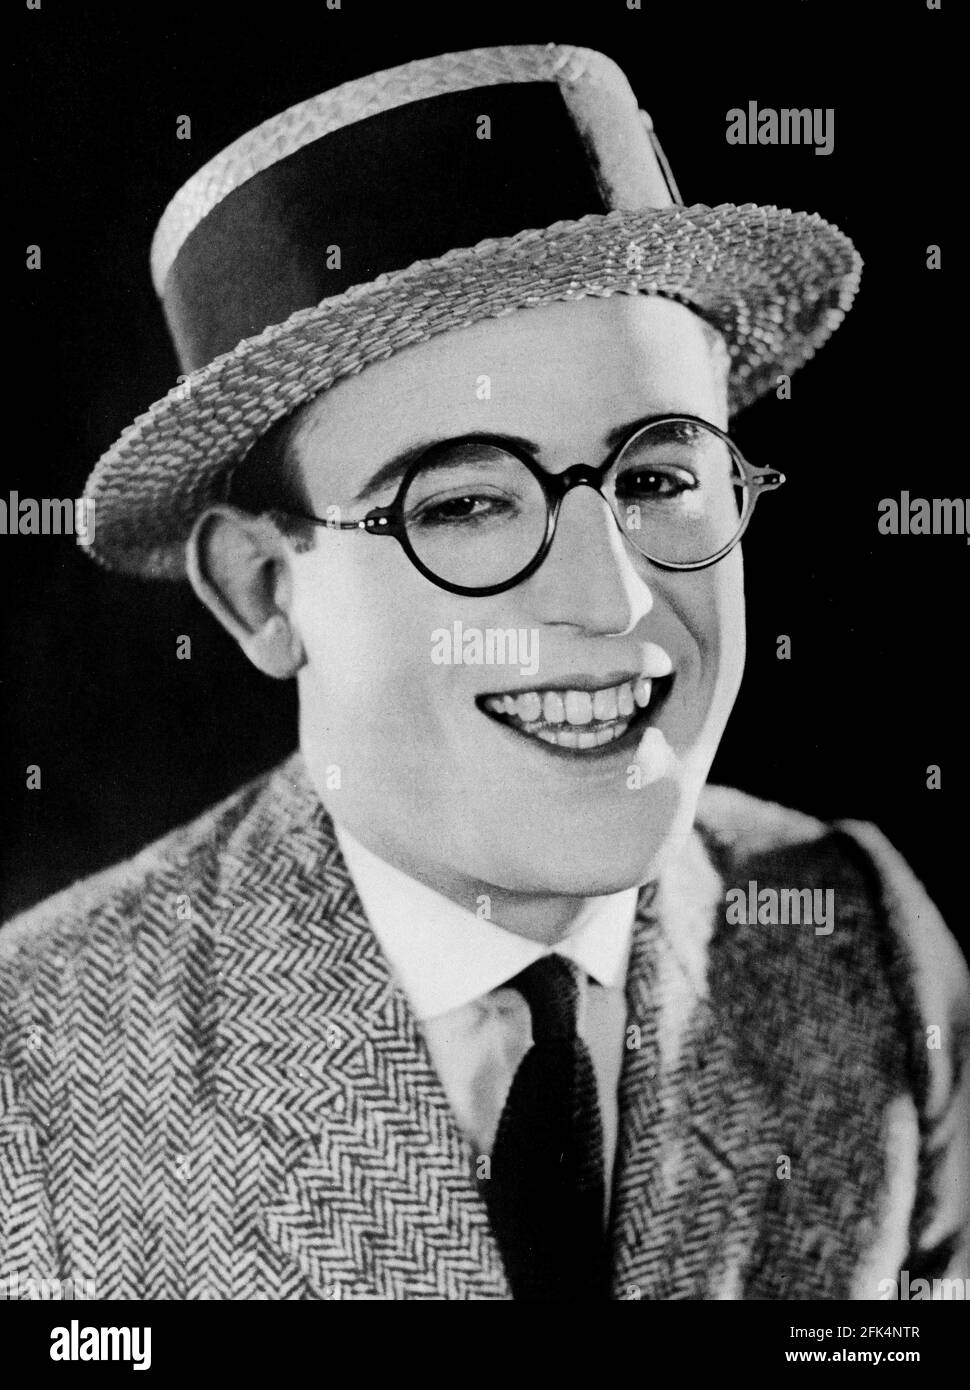 Harold Lloyd. Ritratto della star americana del film muto, Harold Clayton Lloyd Sr. (1893-1971), 1924 Foto Stock